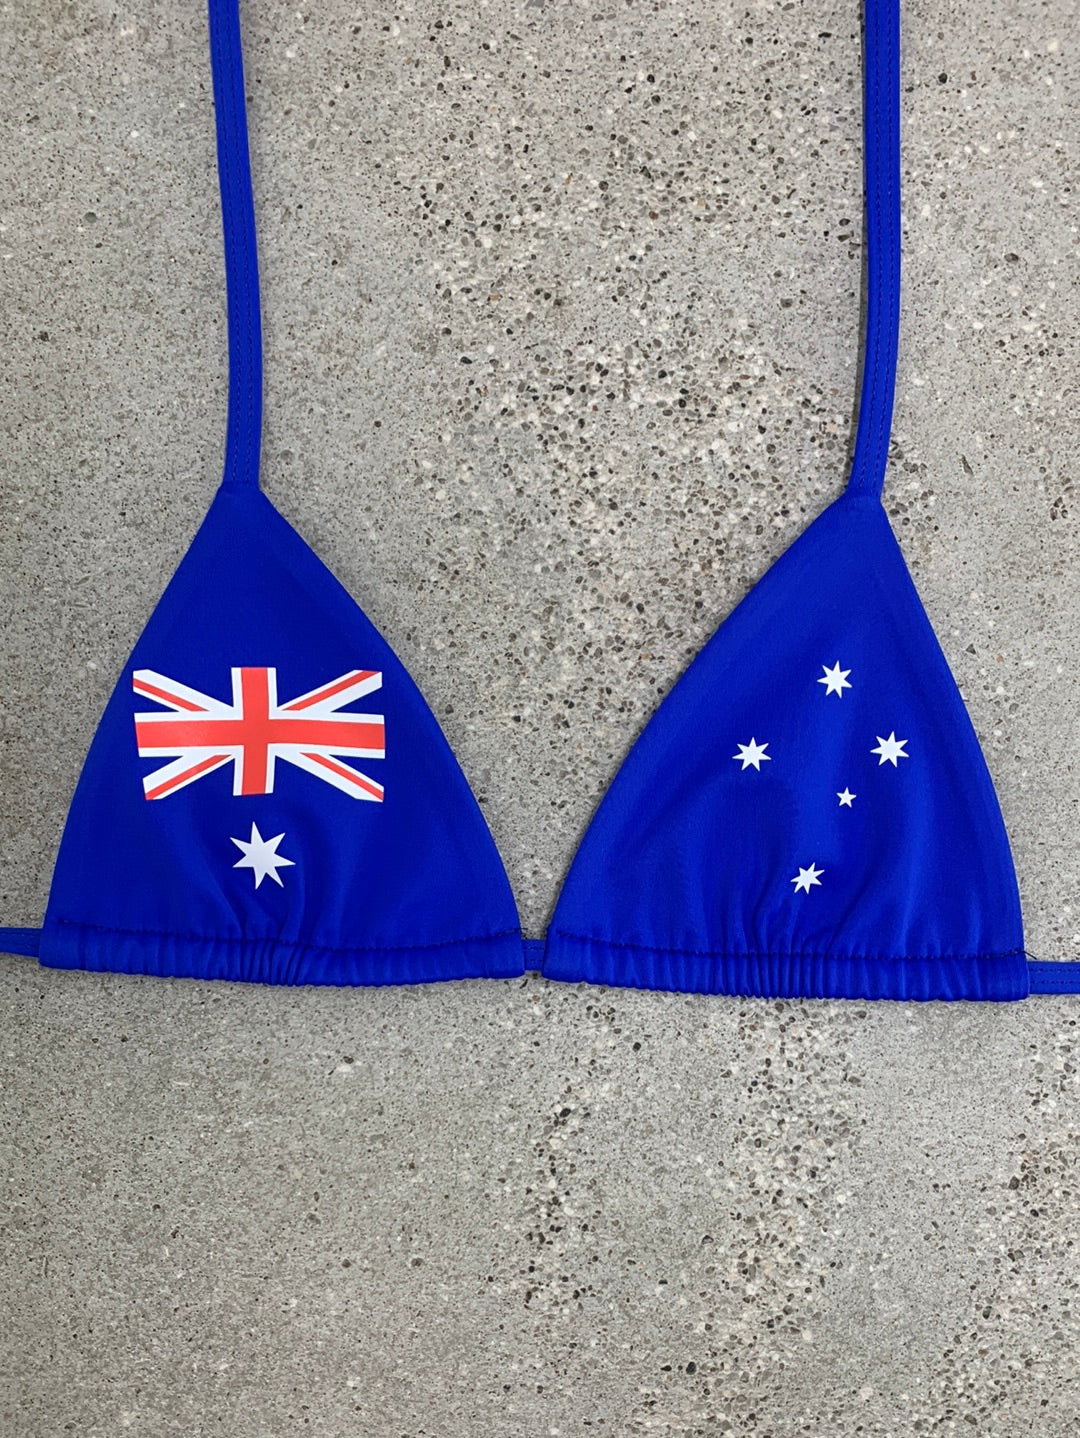 Flag Thongs, Australia the Gift